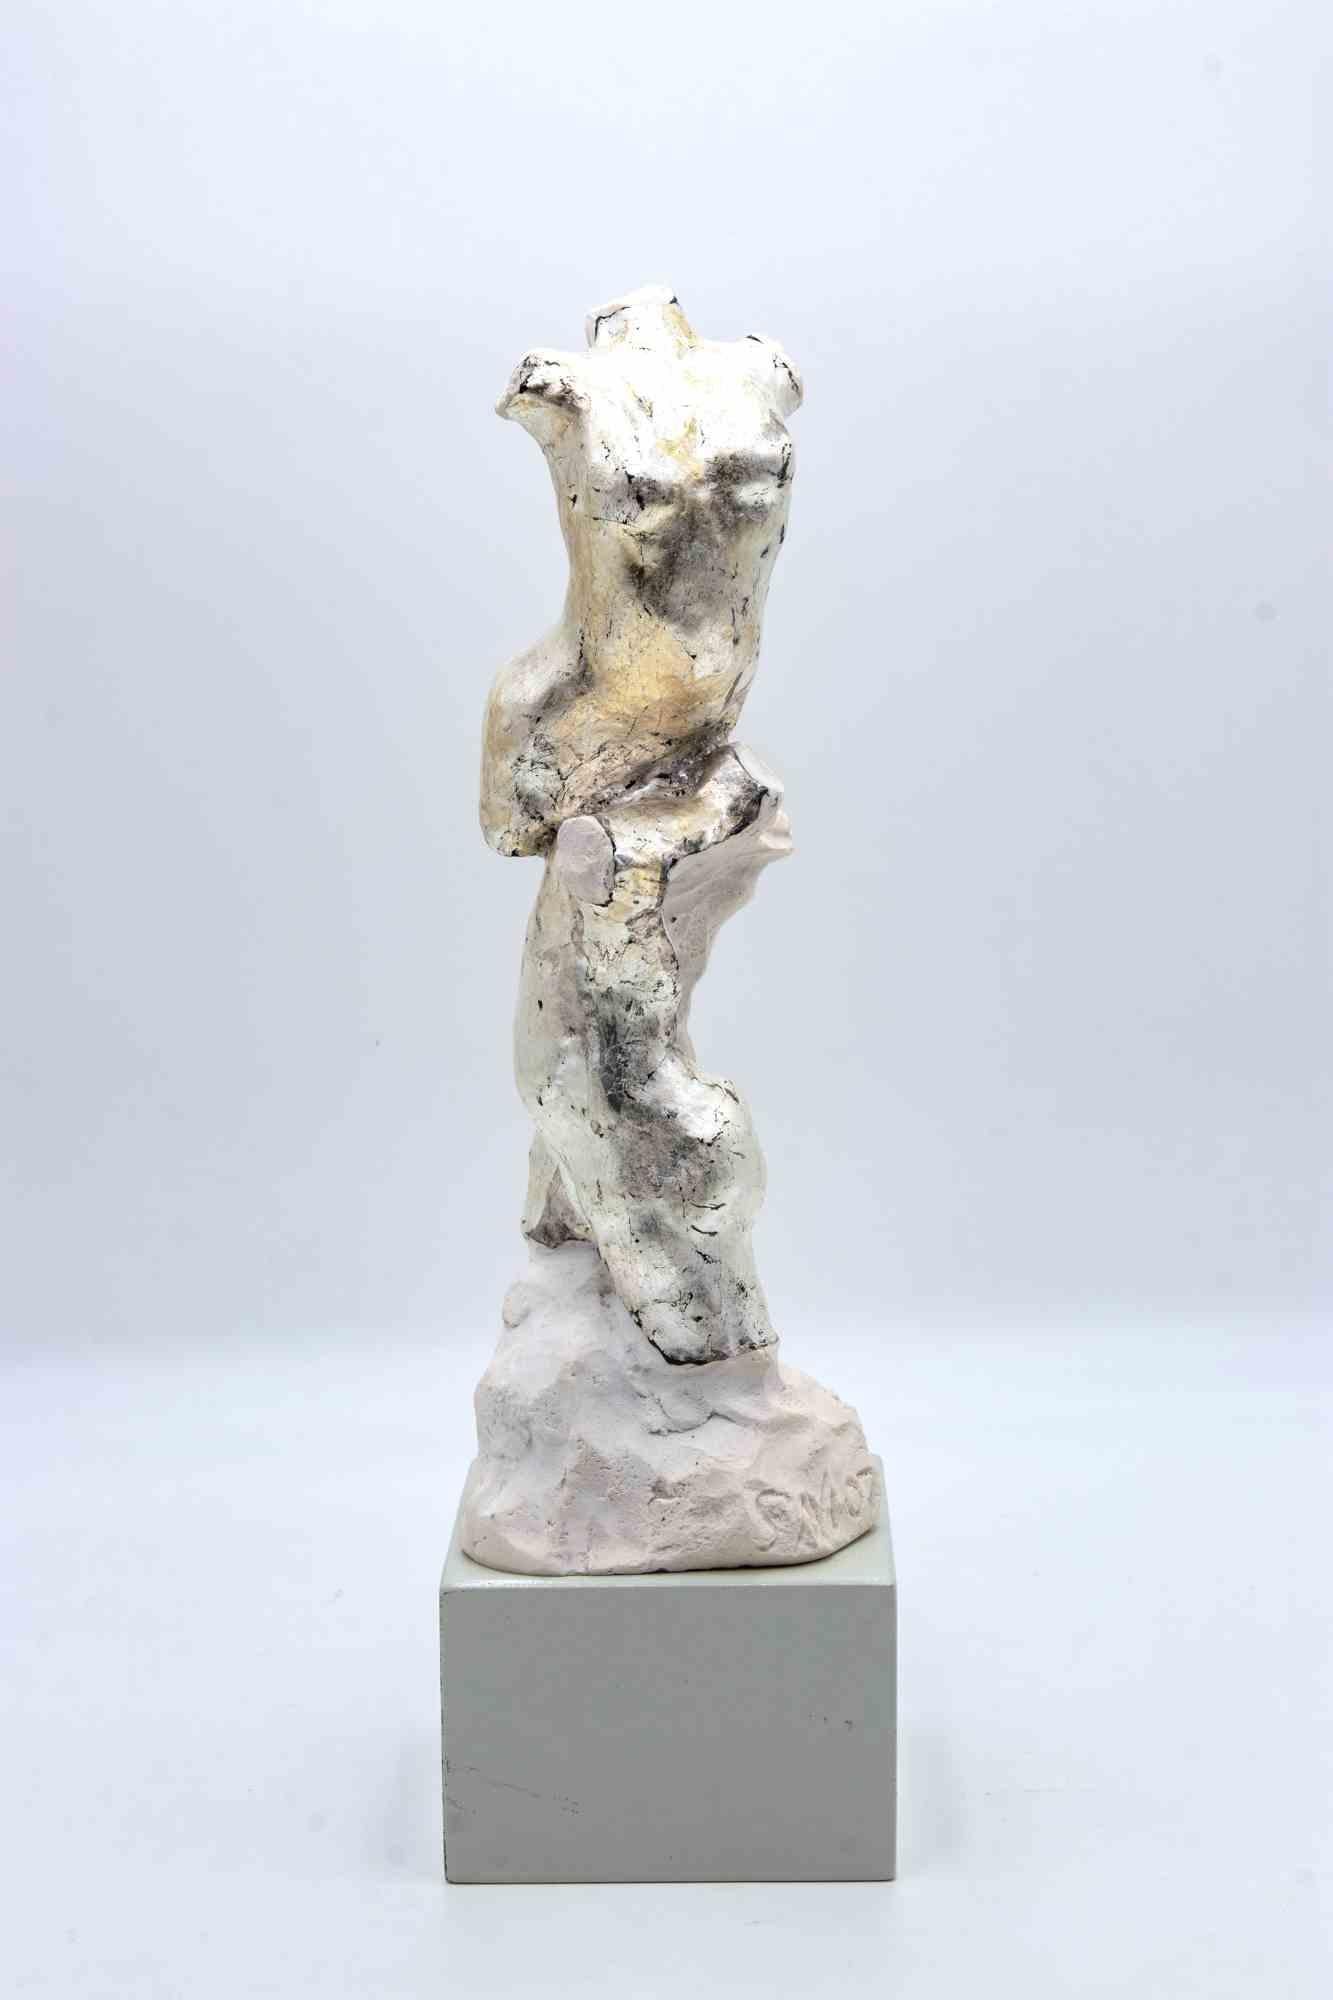 Body of Woman - Sculpture by Fabrizio Savi - 2000s